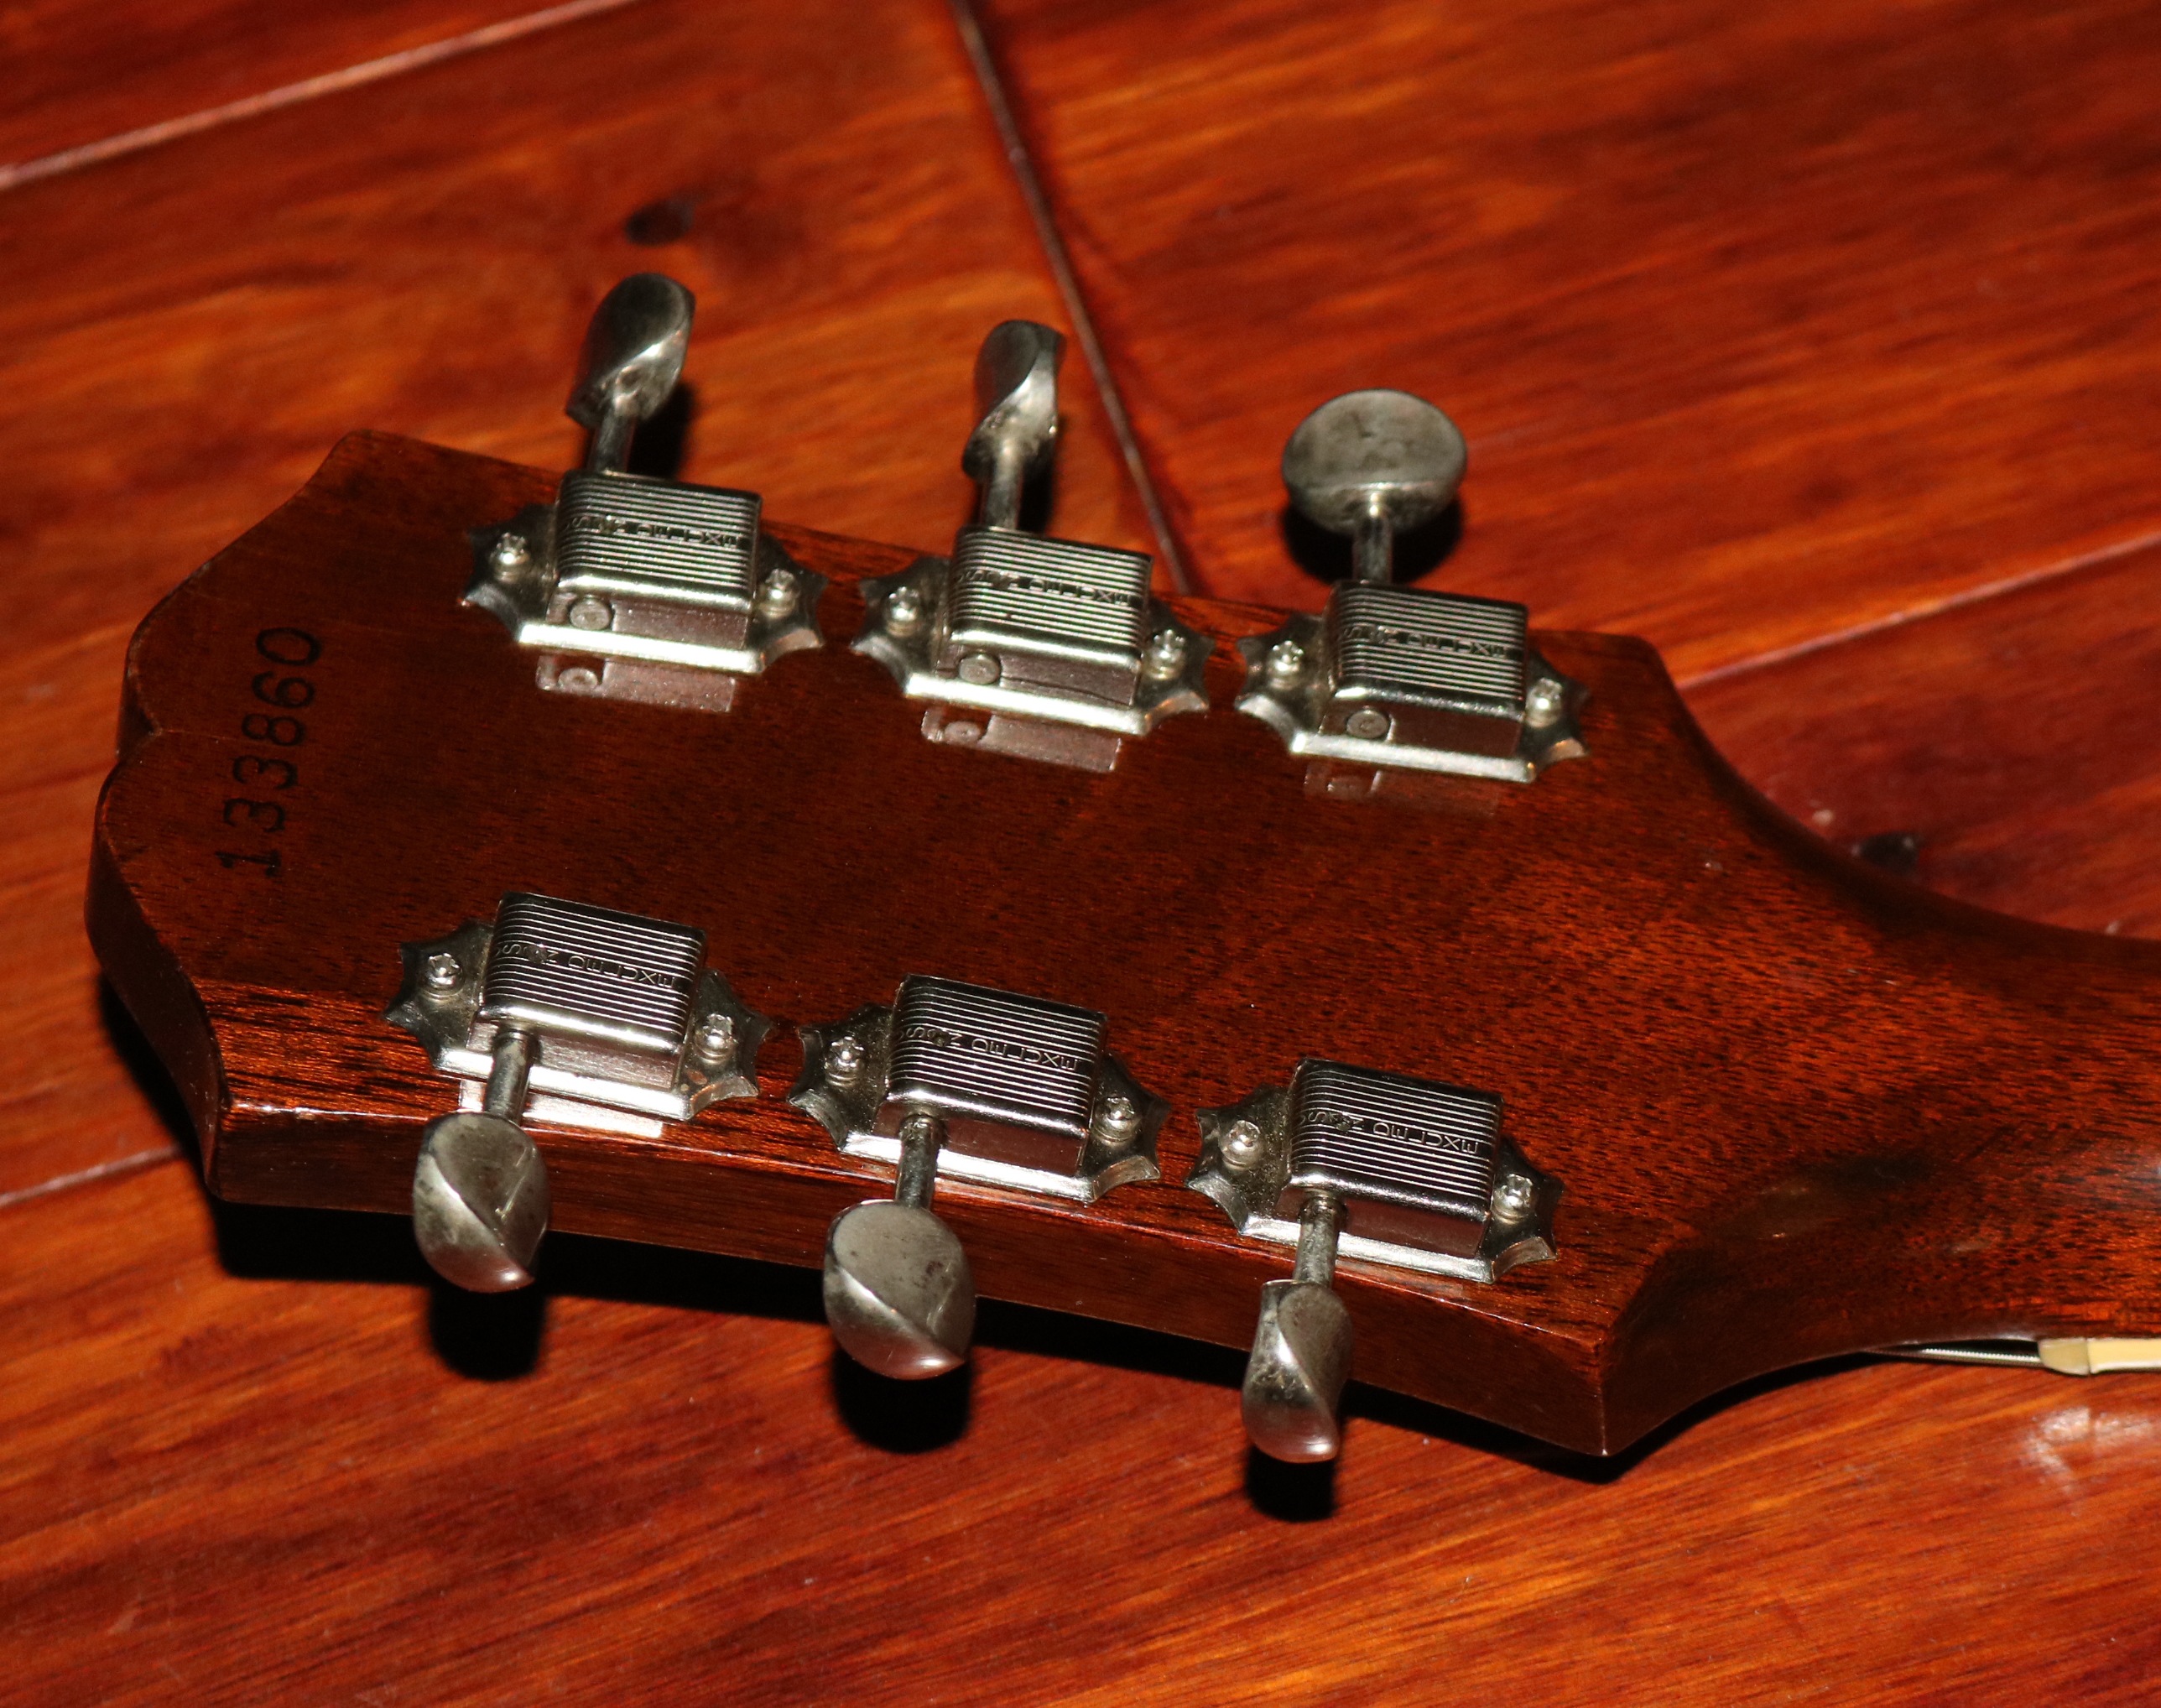 epiphone casino guitar for sale